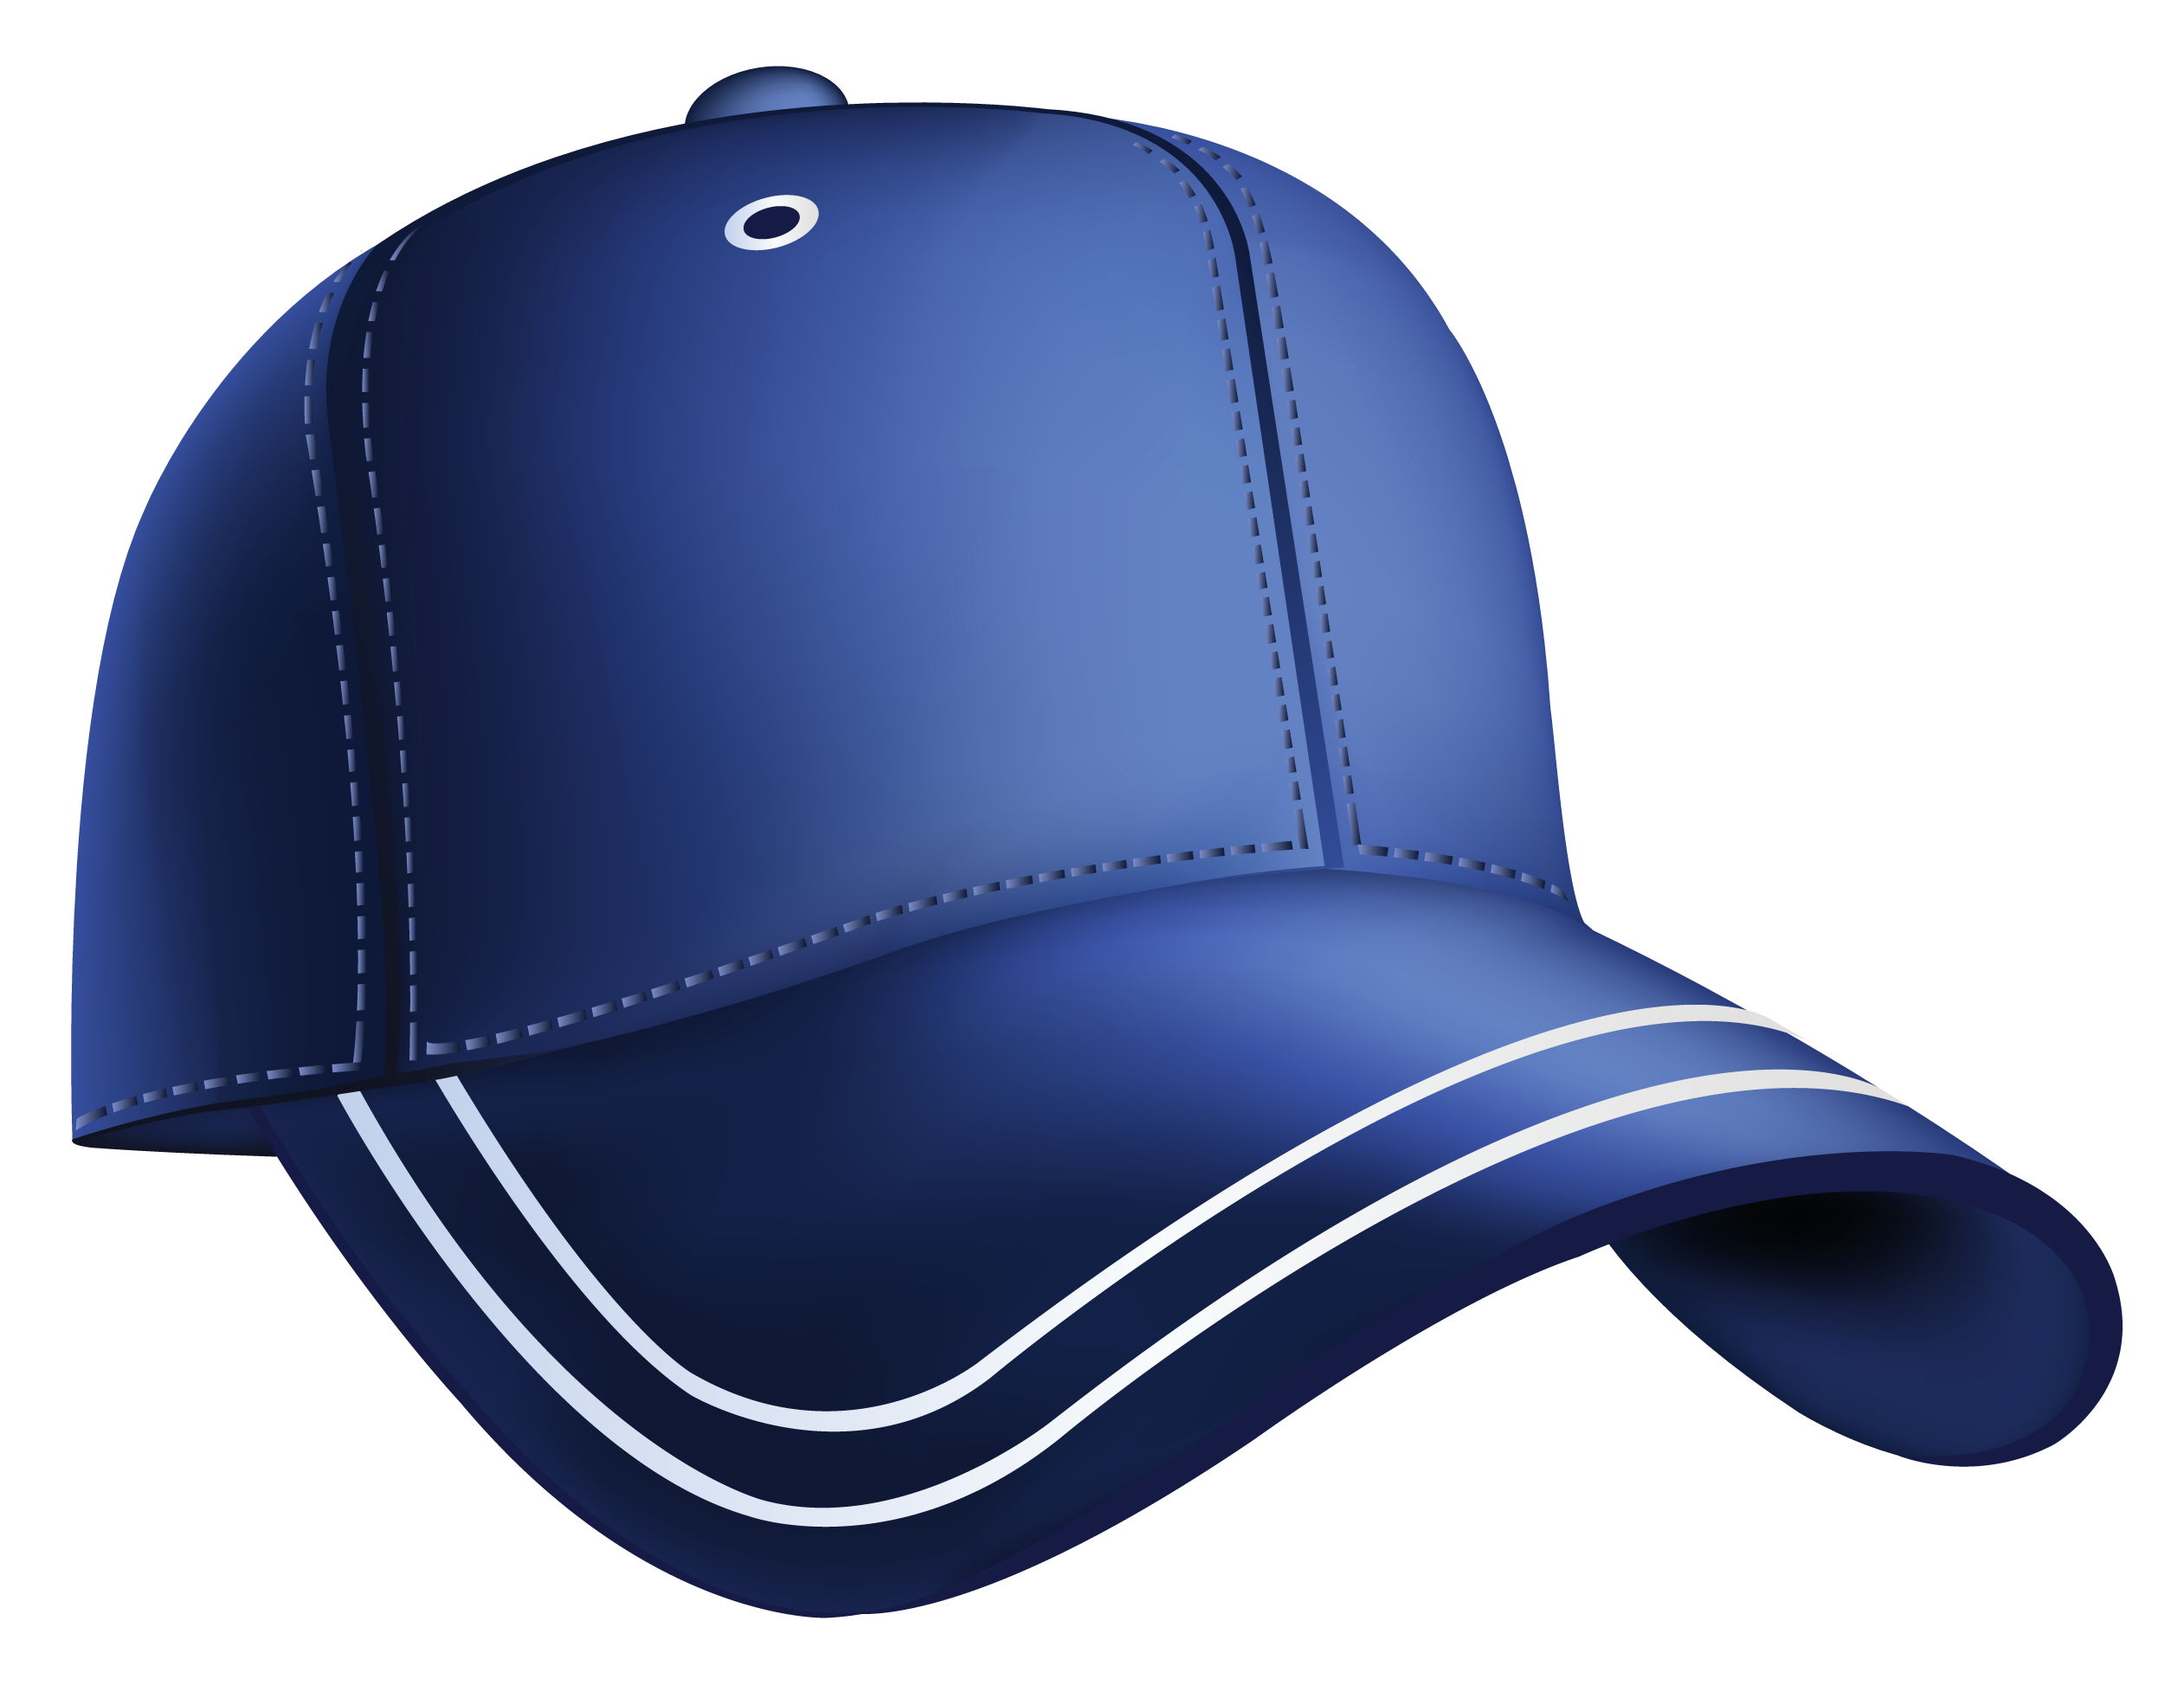 Baseball Cap Png Image - Baseball Cap, Transparent background PNG HD thumbnail